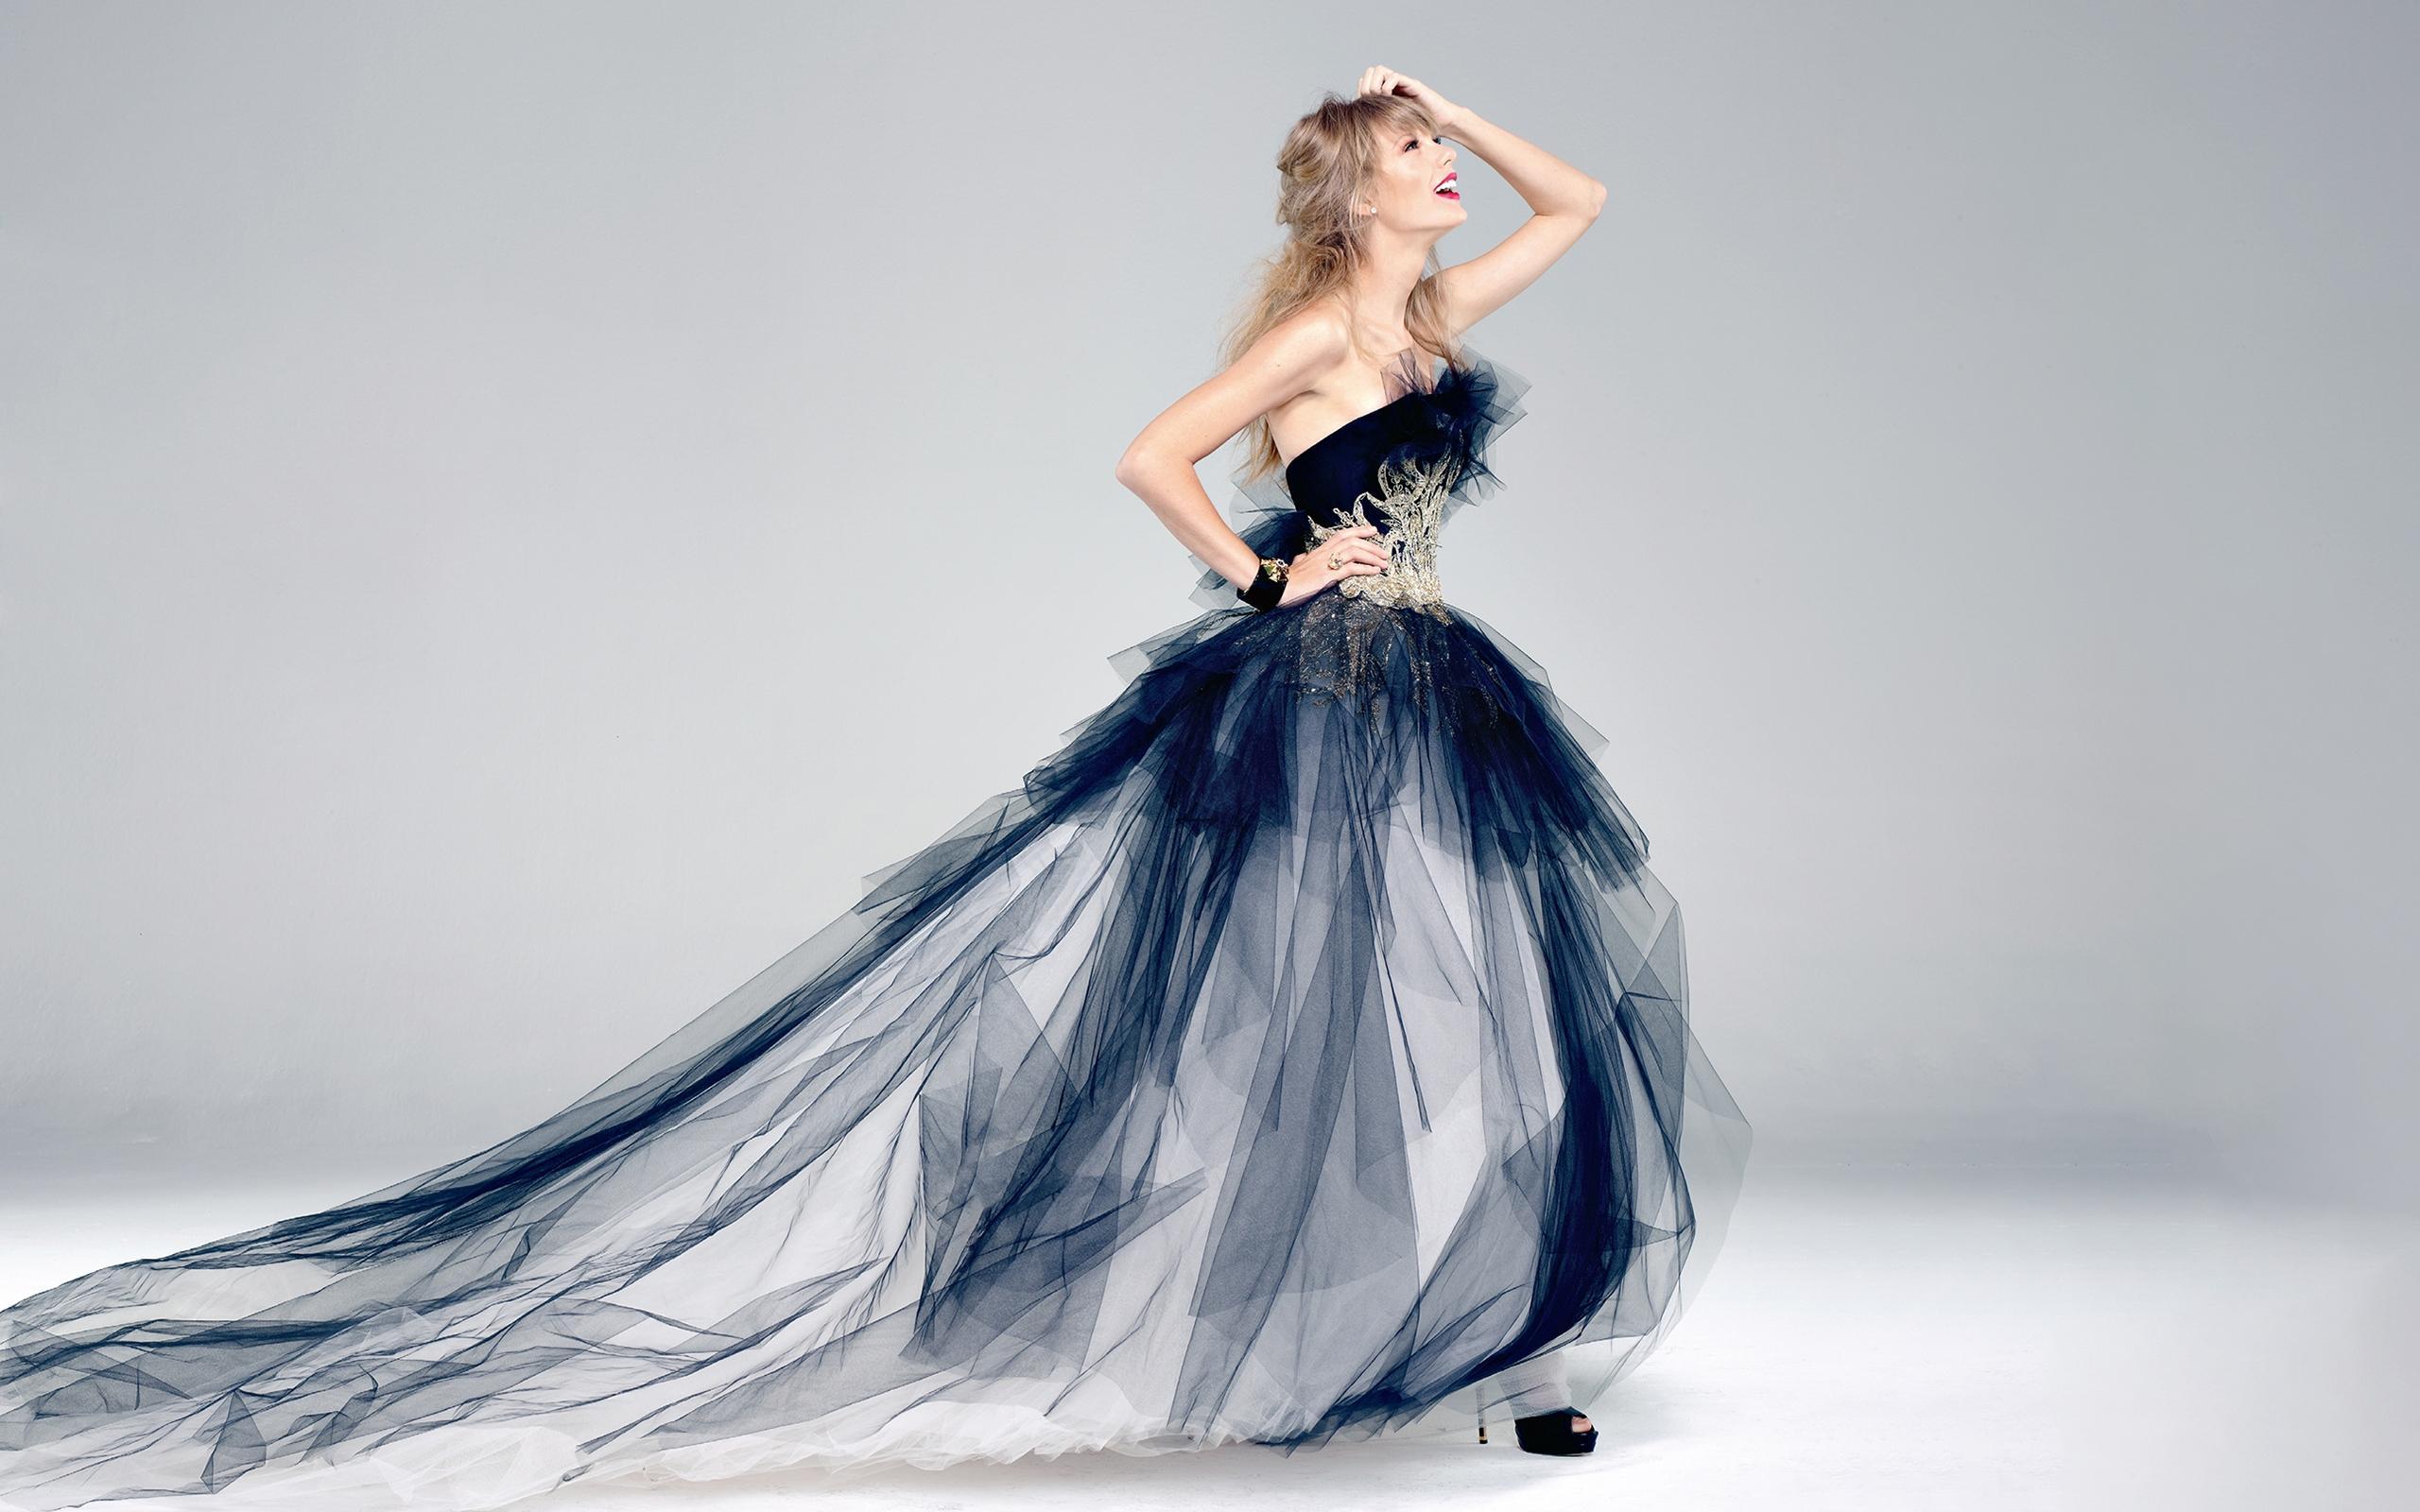 Download 2560x1600 Taylor Swift, Full Body Portrait, Dress, Profile